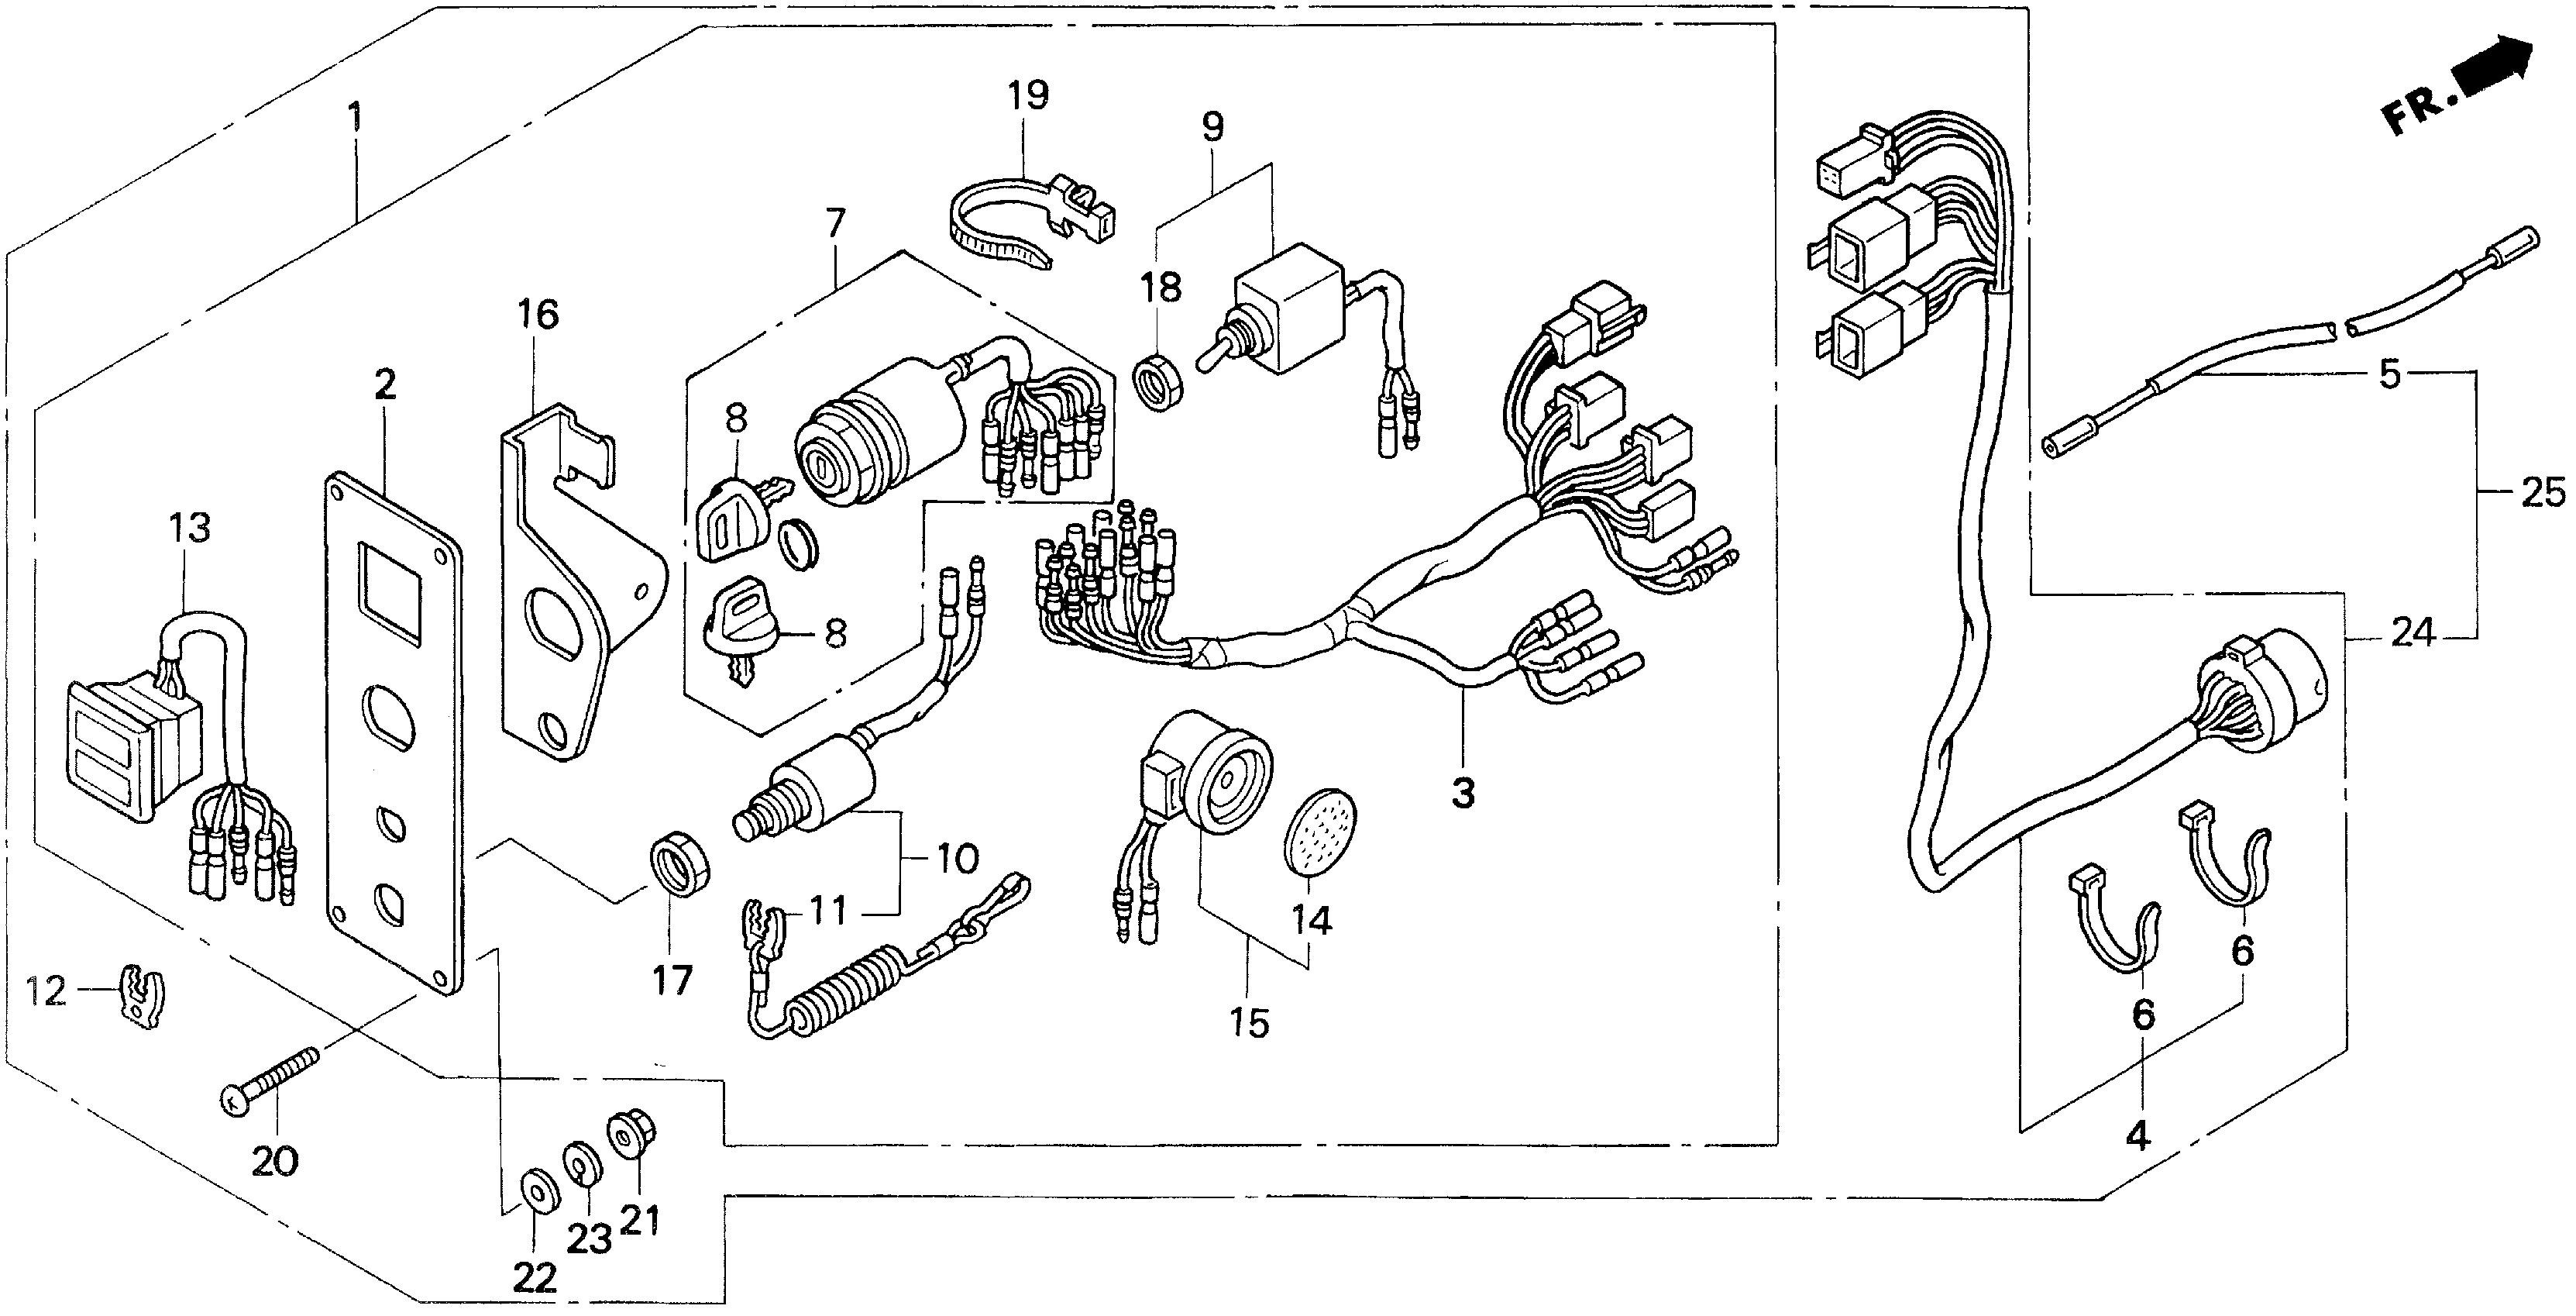 Honda Outboard Parts Diagram Honda Marine Parts Look Up Ficial Site Of Honda Outboard Parts Diagram